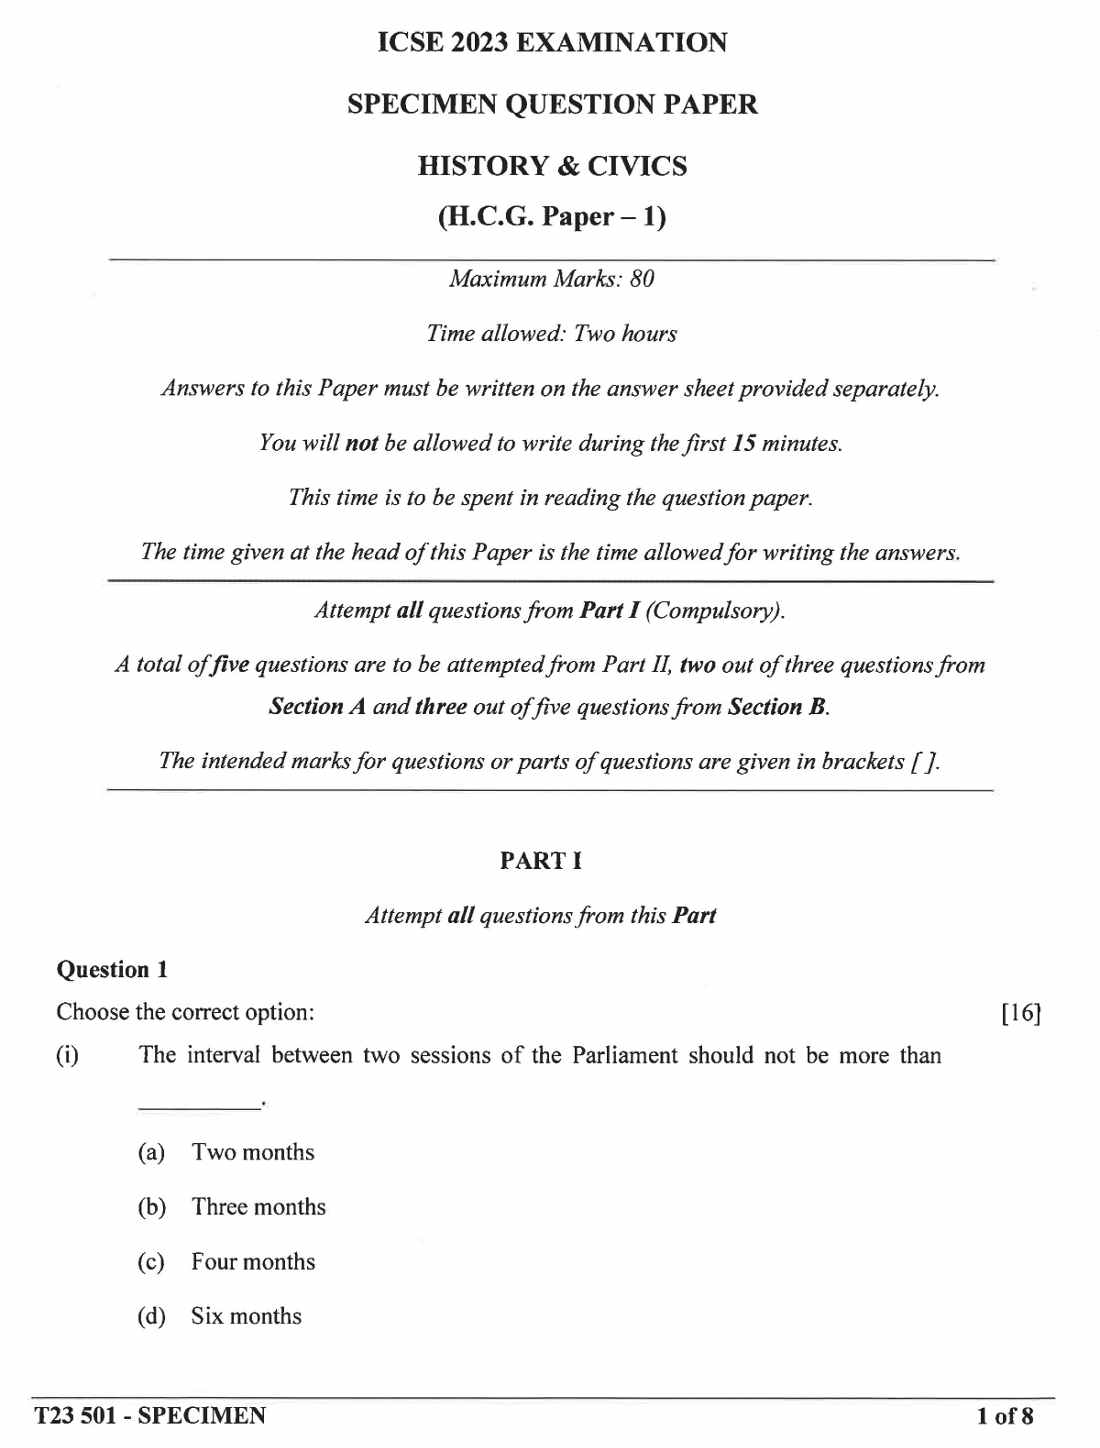 ICSE History and Civics Specimen Paper 2023 Image 1